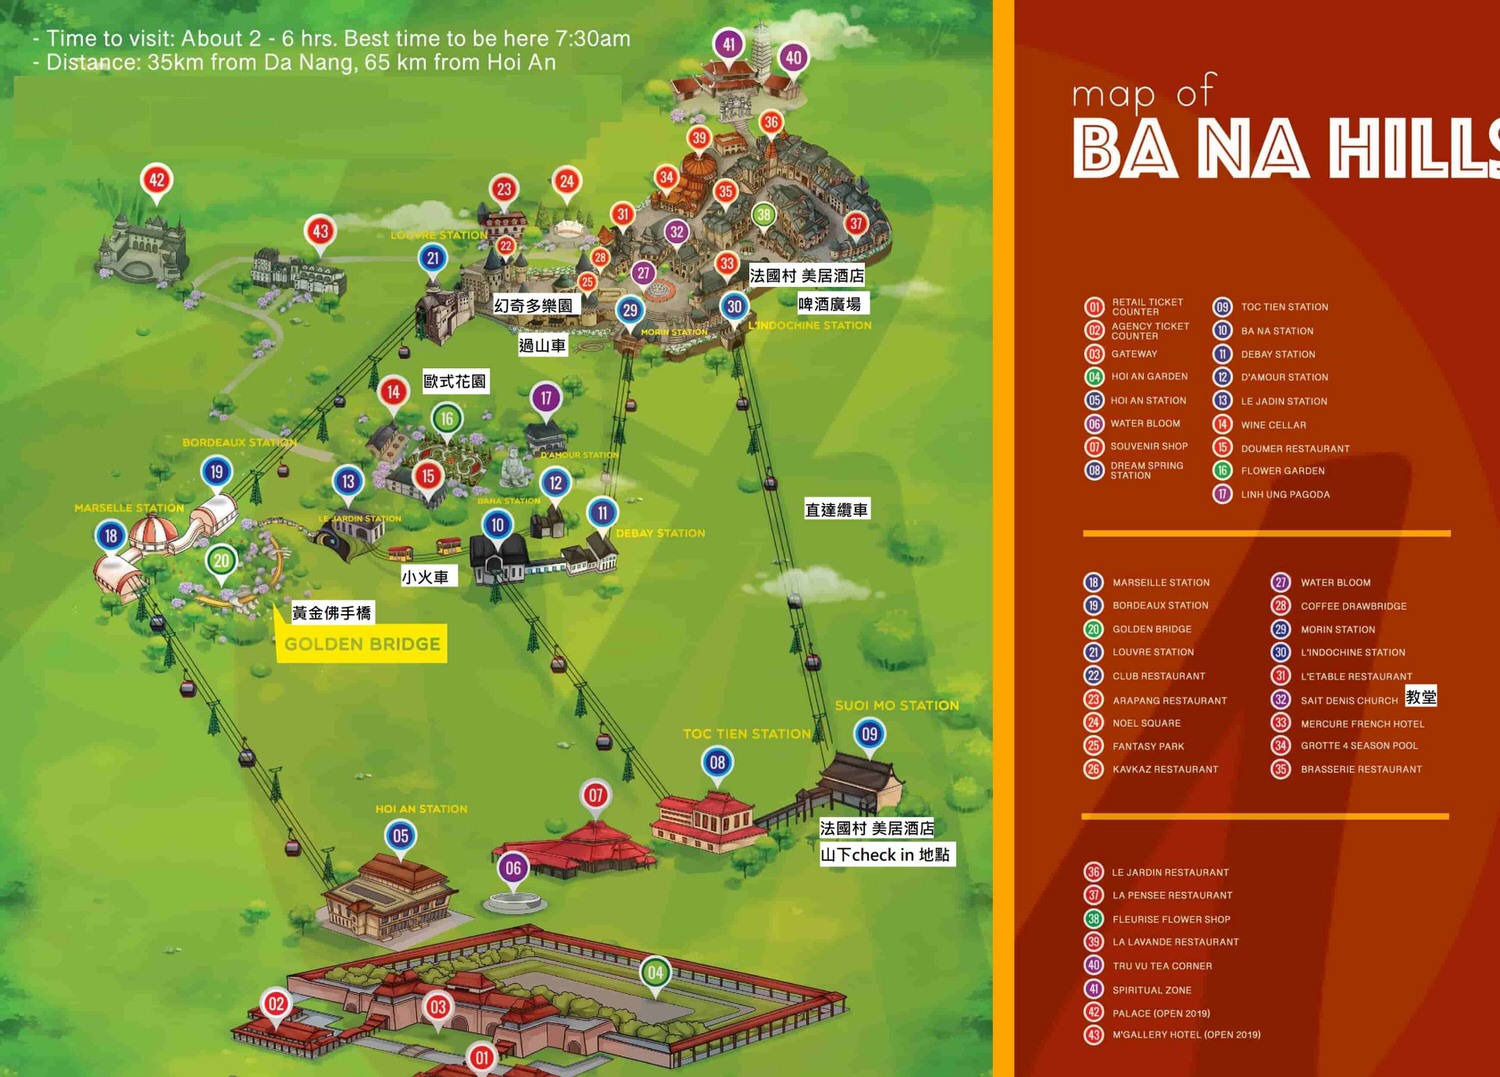 Ba Na Hills 園區地圖。越南峴港 巴拿山太陽世界 坐上世界最長的單纜纜車 暢玩各種遊樂設施 拜訪著名黃金佛手橋。